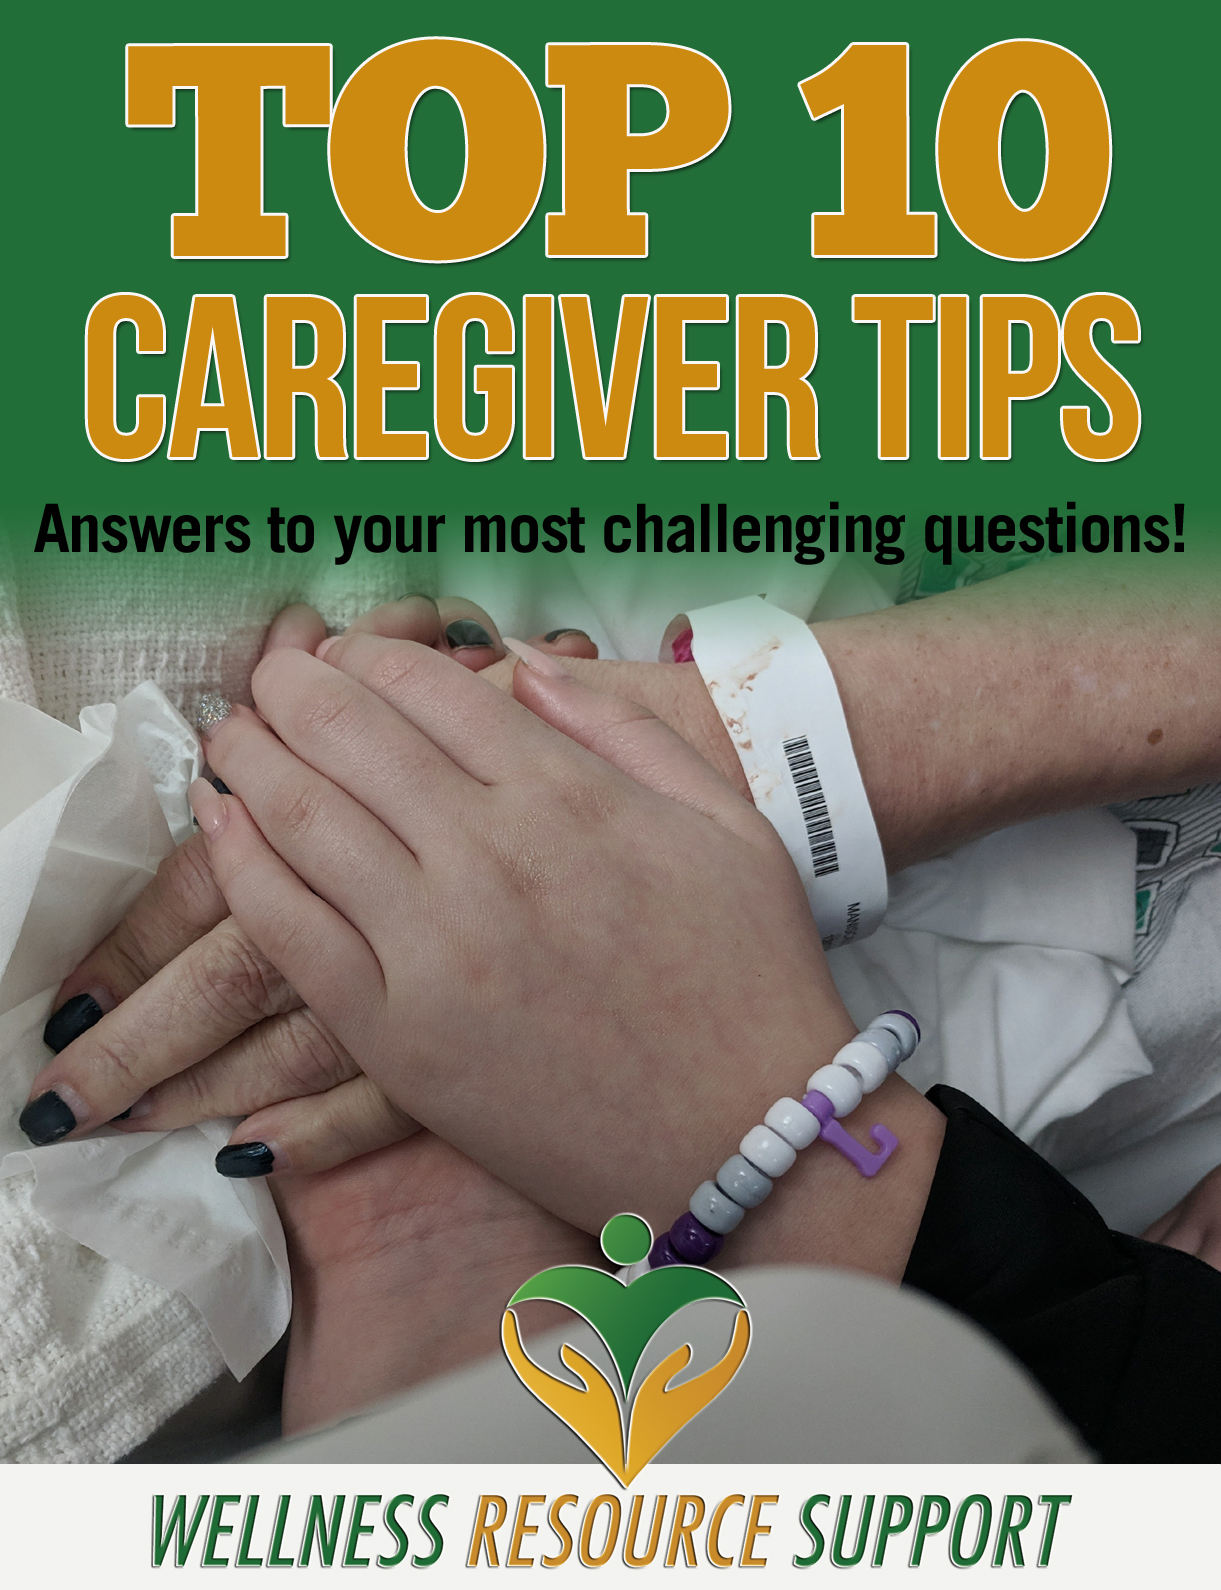 Top 10 Caregiver Tips